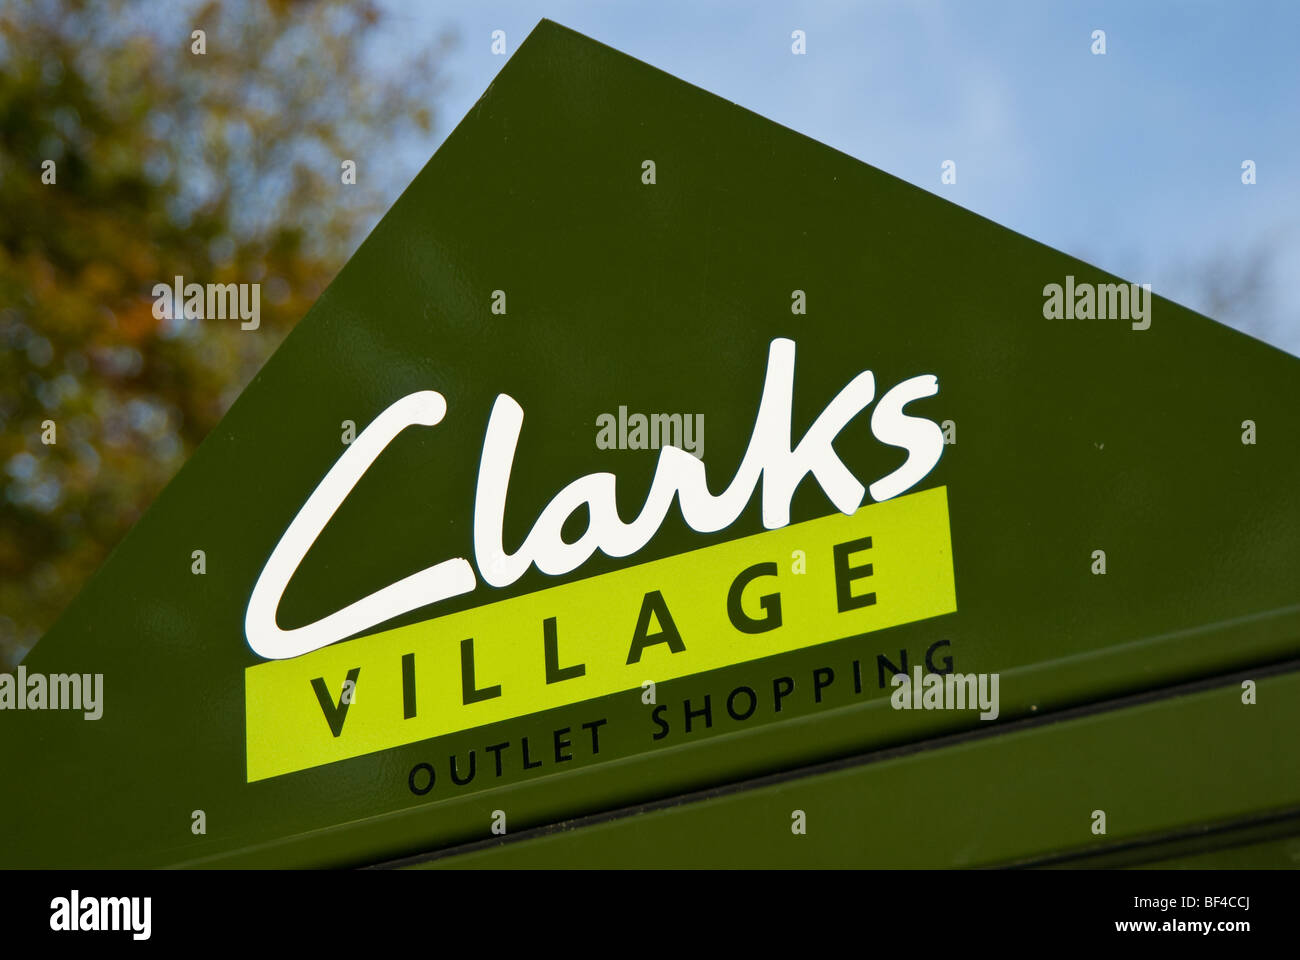 Clarks Village outlet shopping center, Rue, Somerset, Angleterre. Banque D'Images